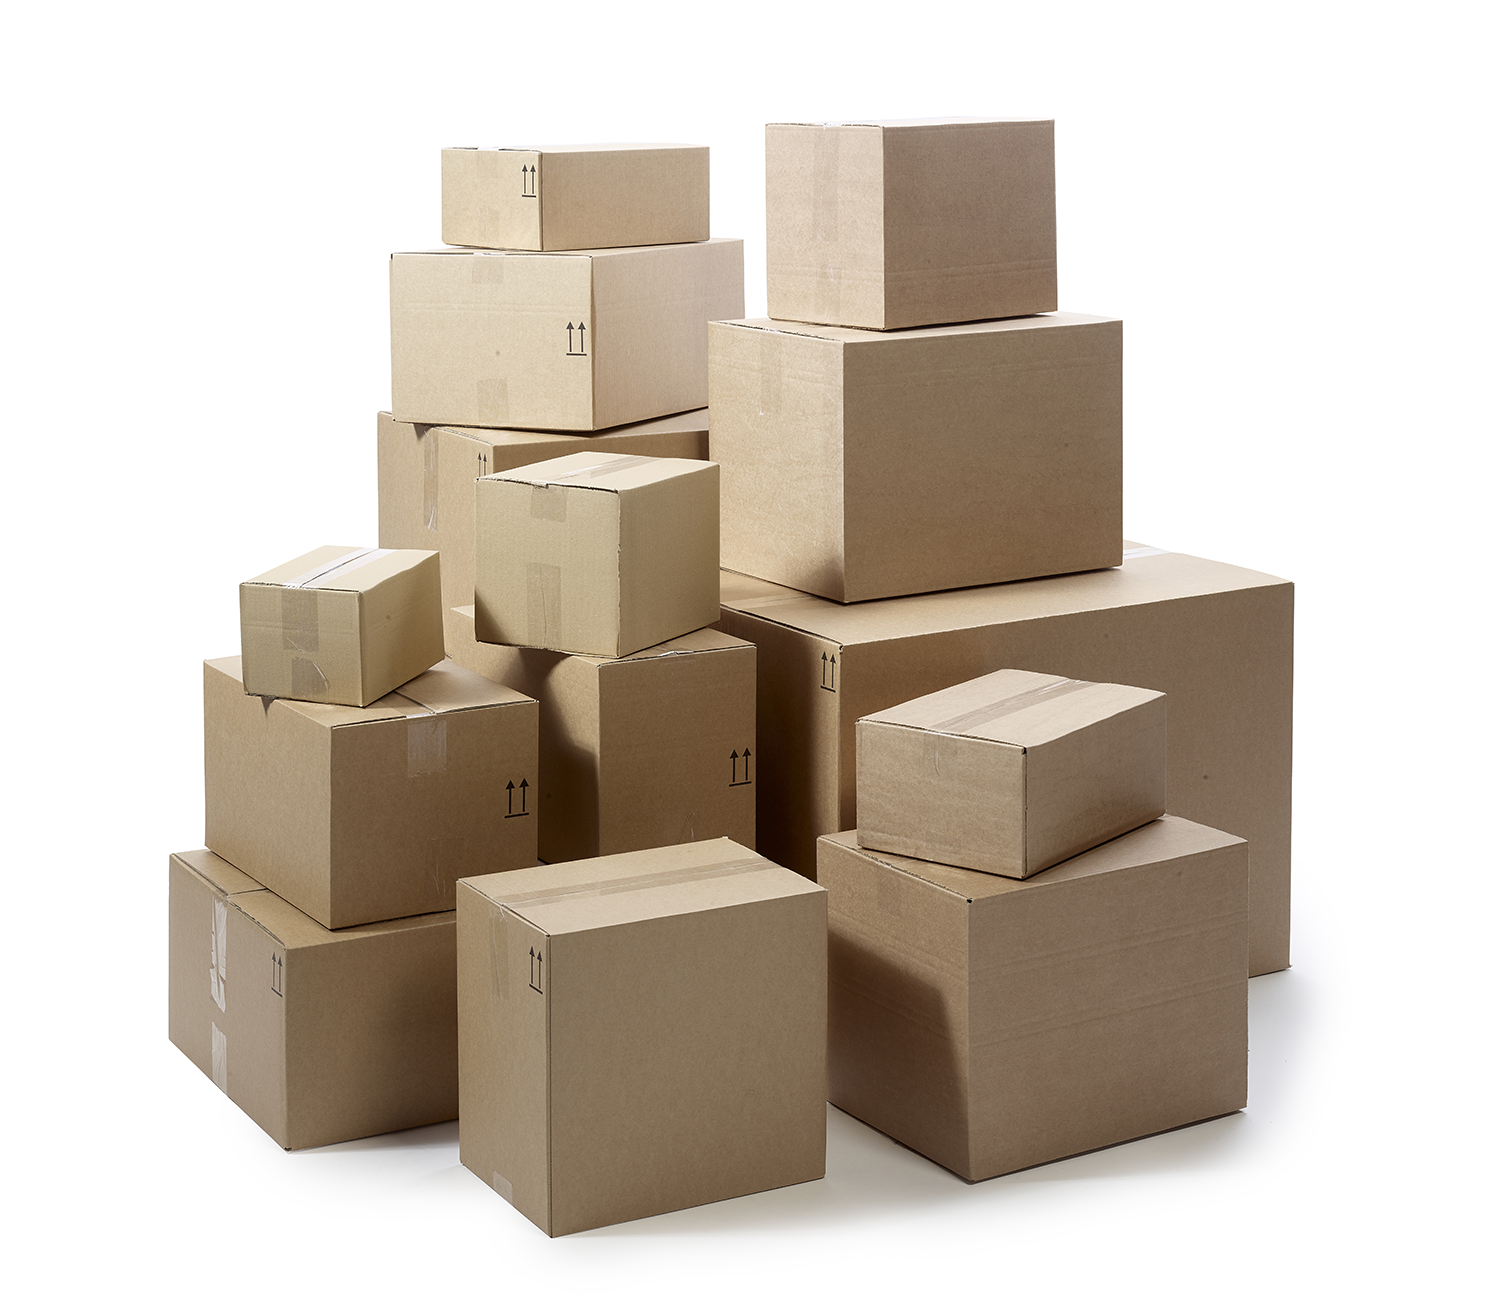 Basic cardboard boxes